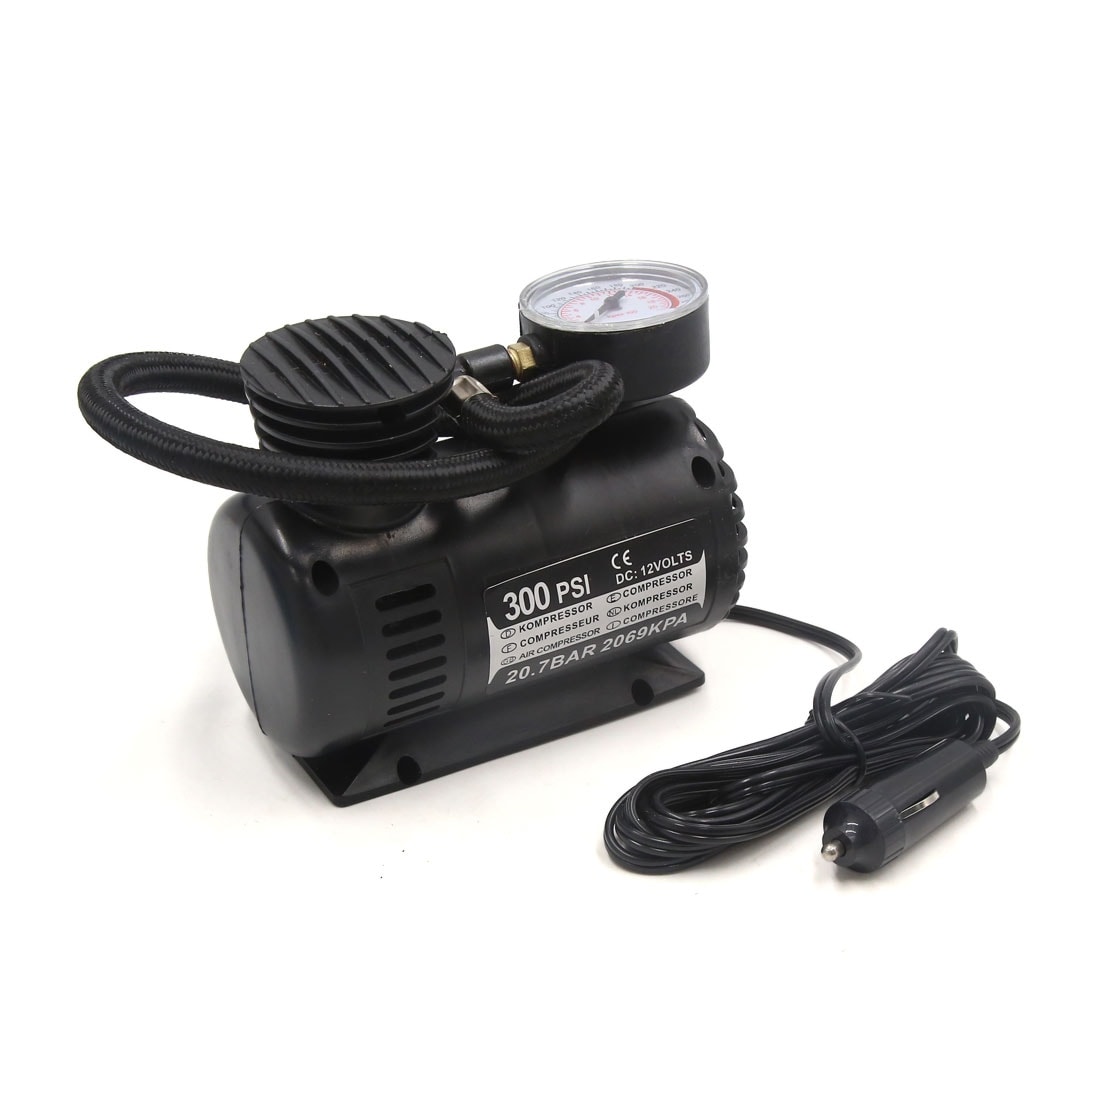 Universal Black Car Air Compressor Electric Tire Inflator Pump 12V 300 PSI  - Bed Bath & Beyond - 17999390